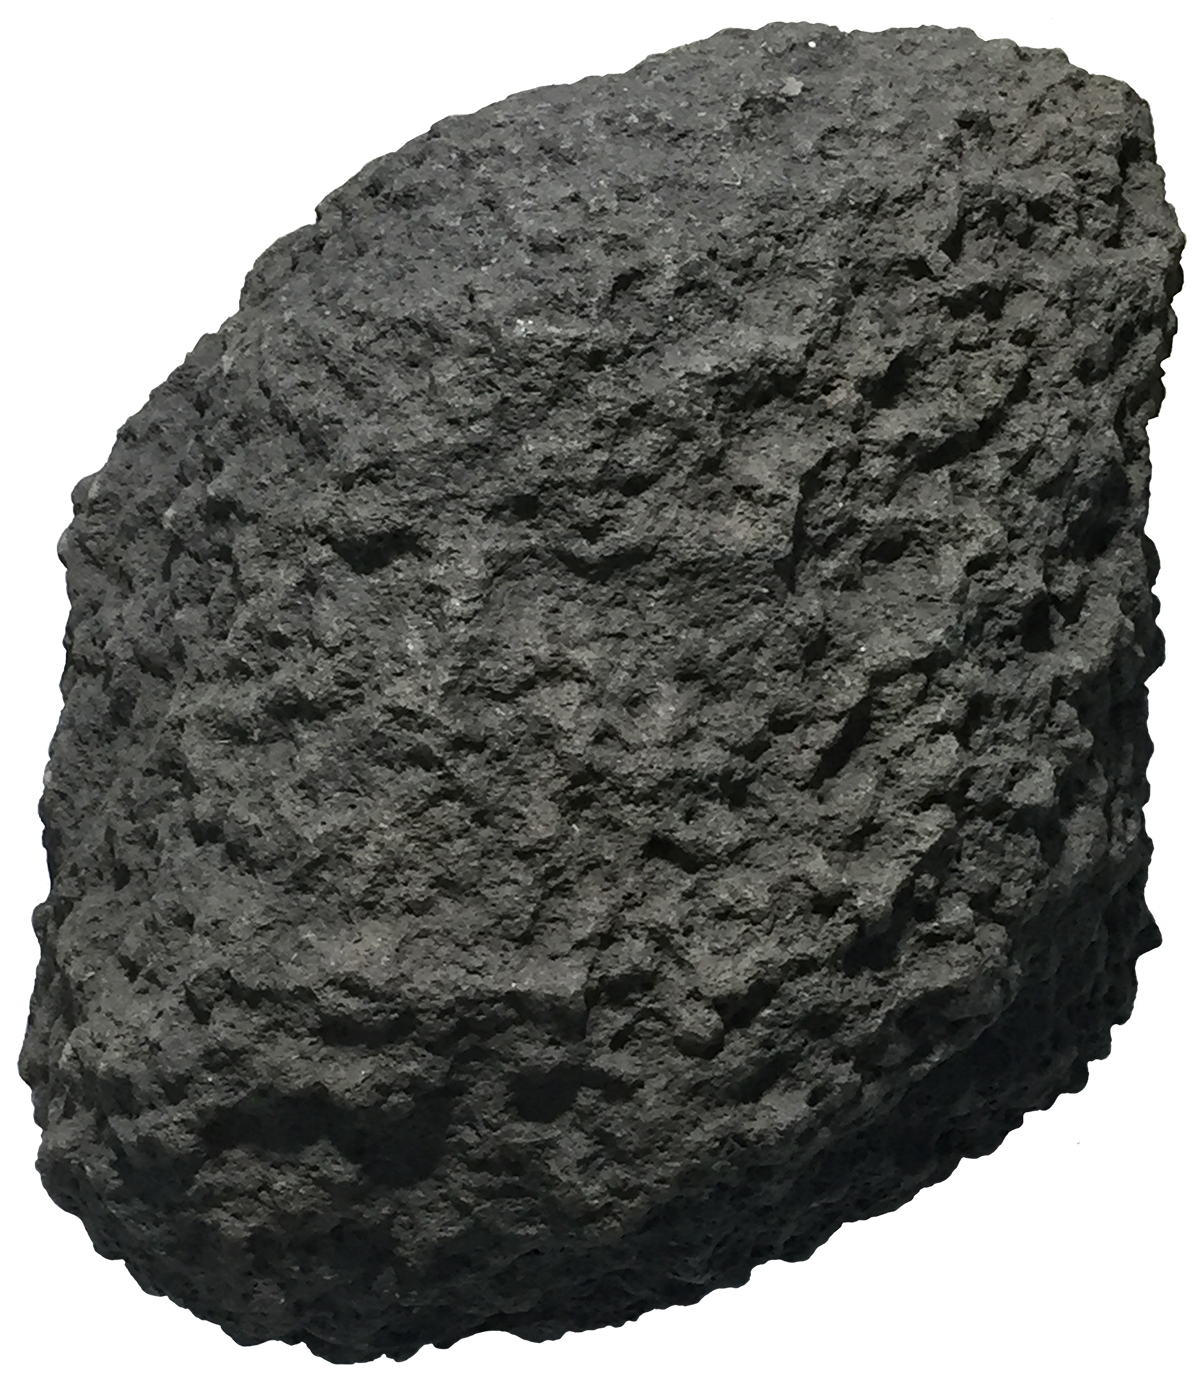 image of a diabase rock